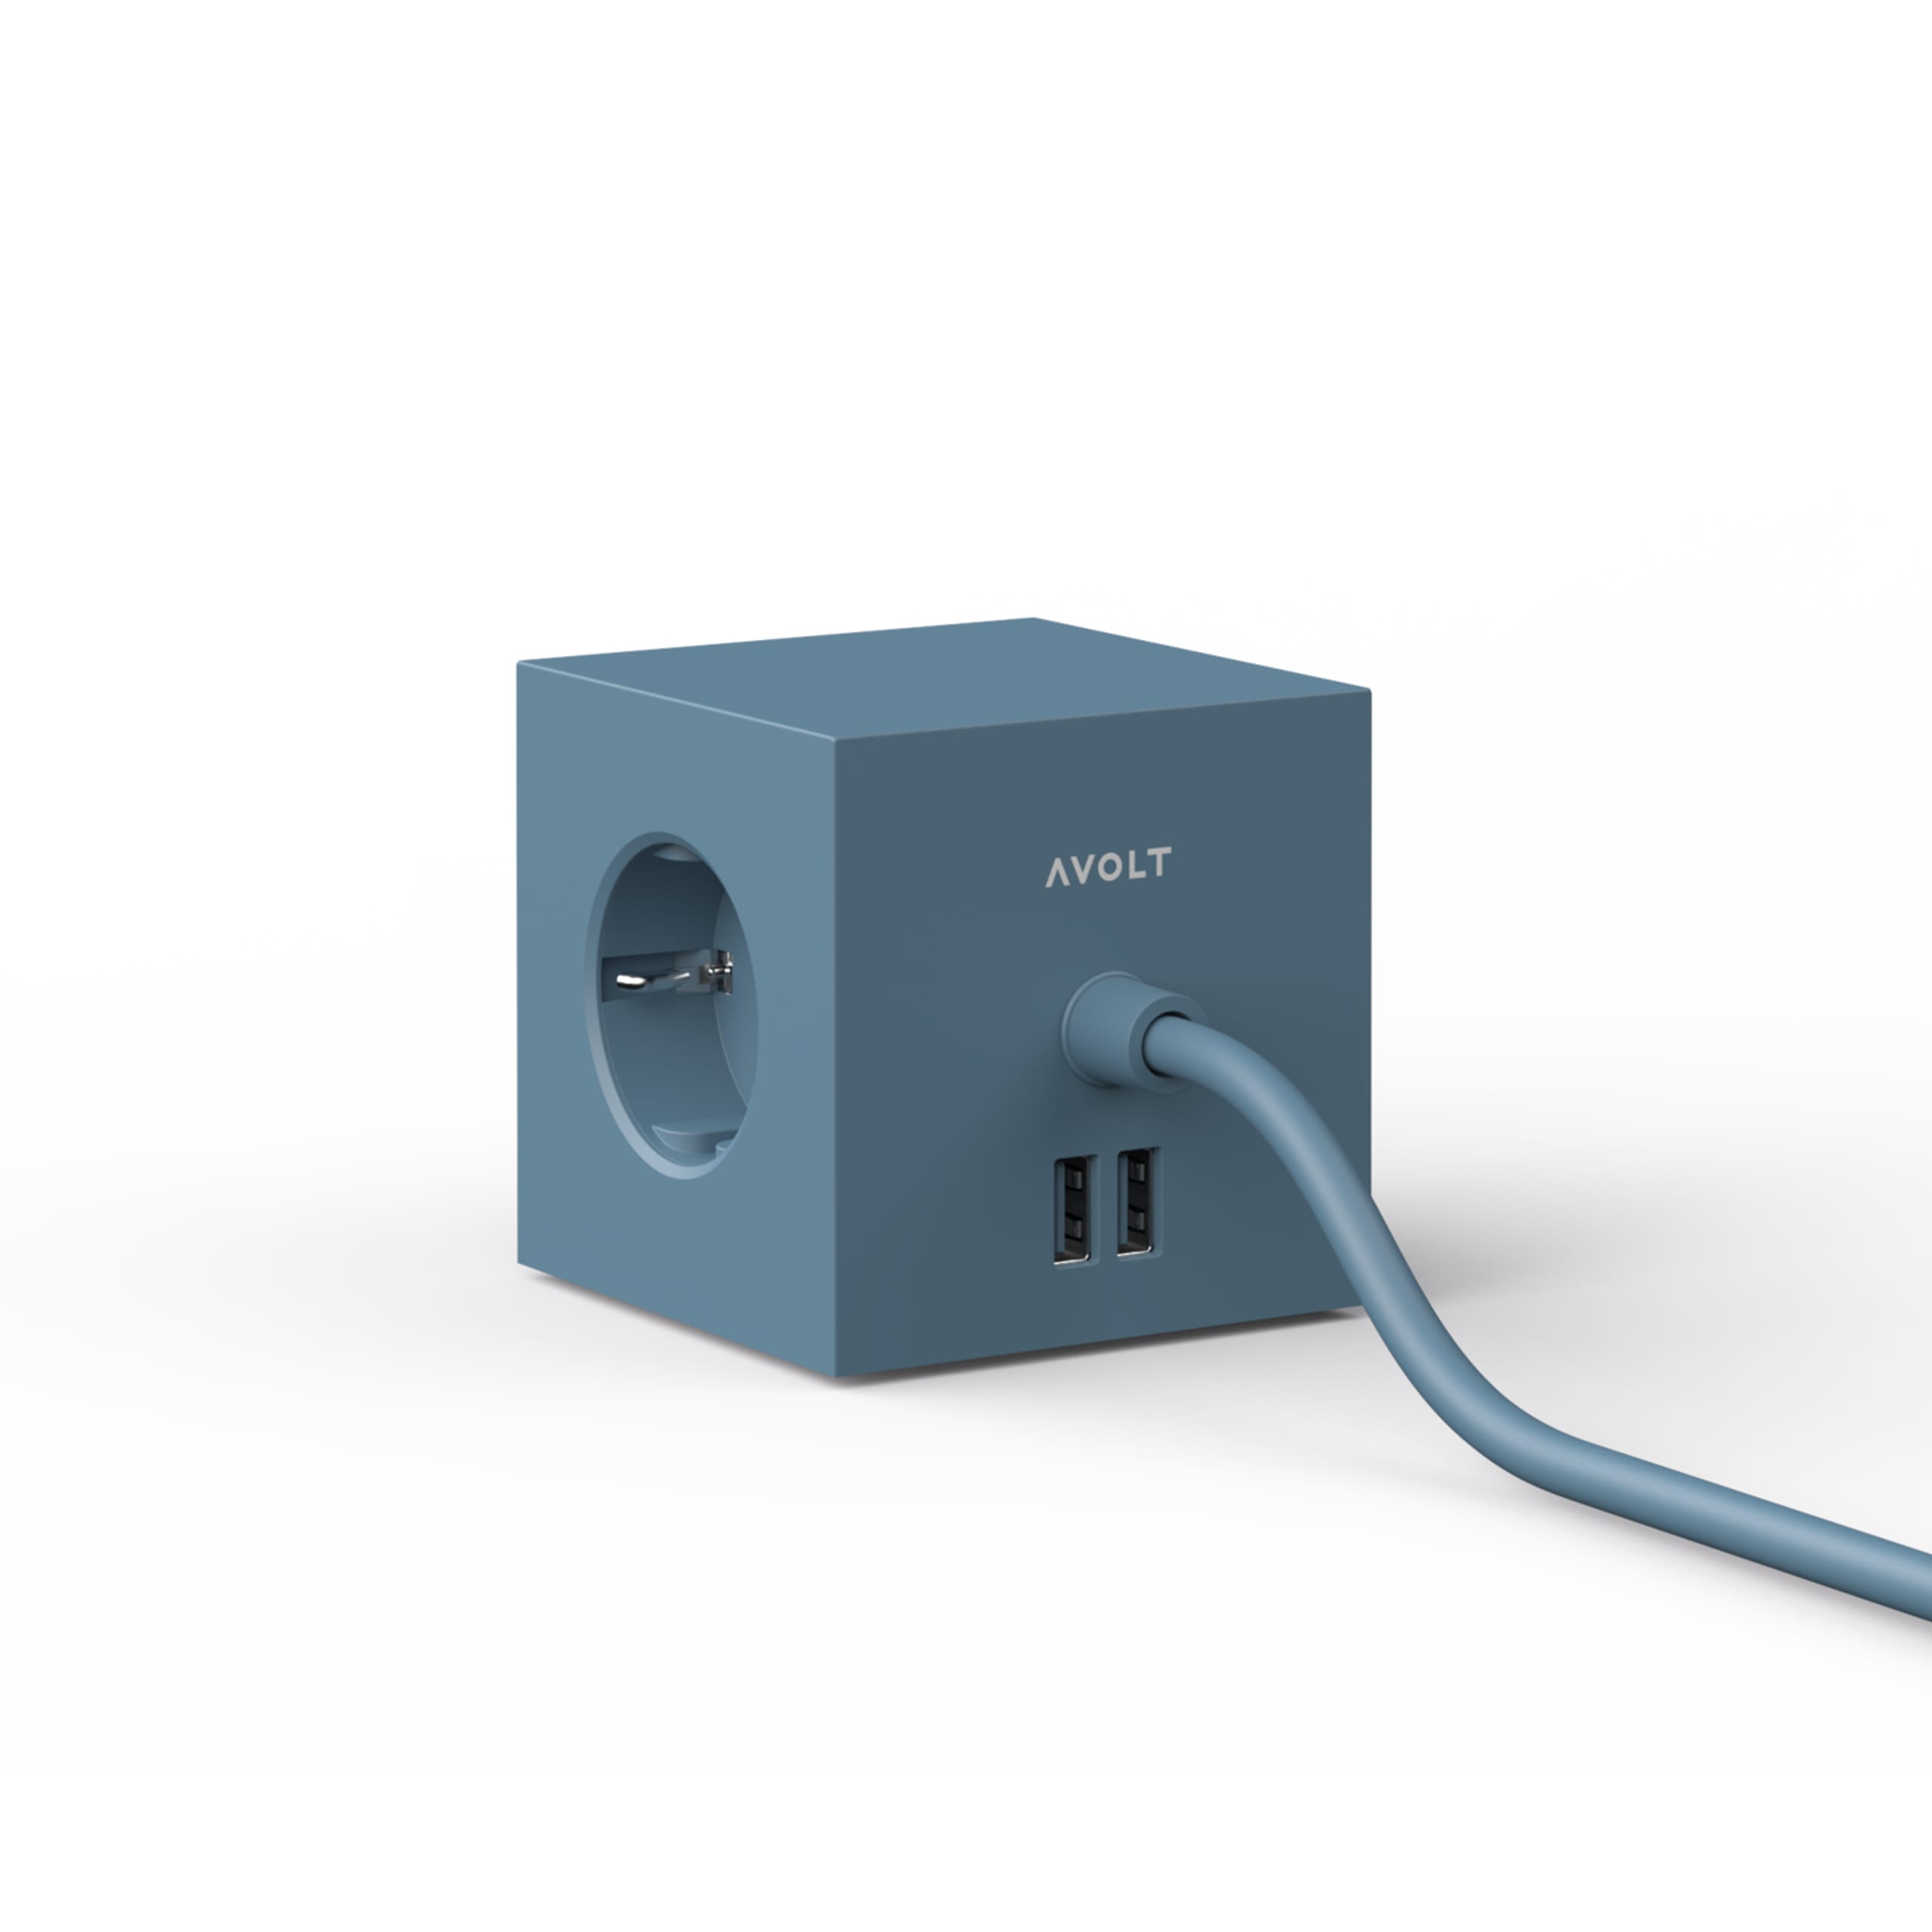 Avolt - Square 1 Extension Cord with USB Plug - Blue